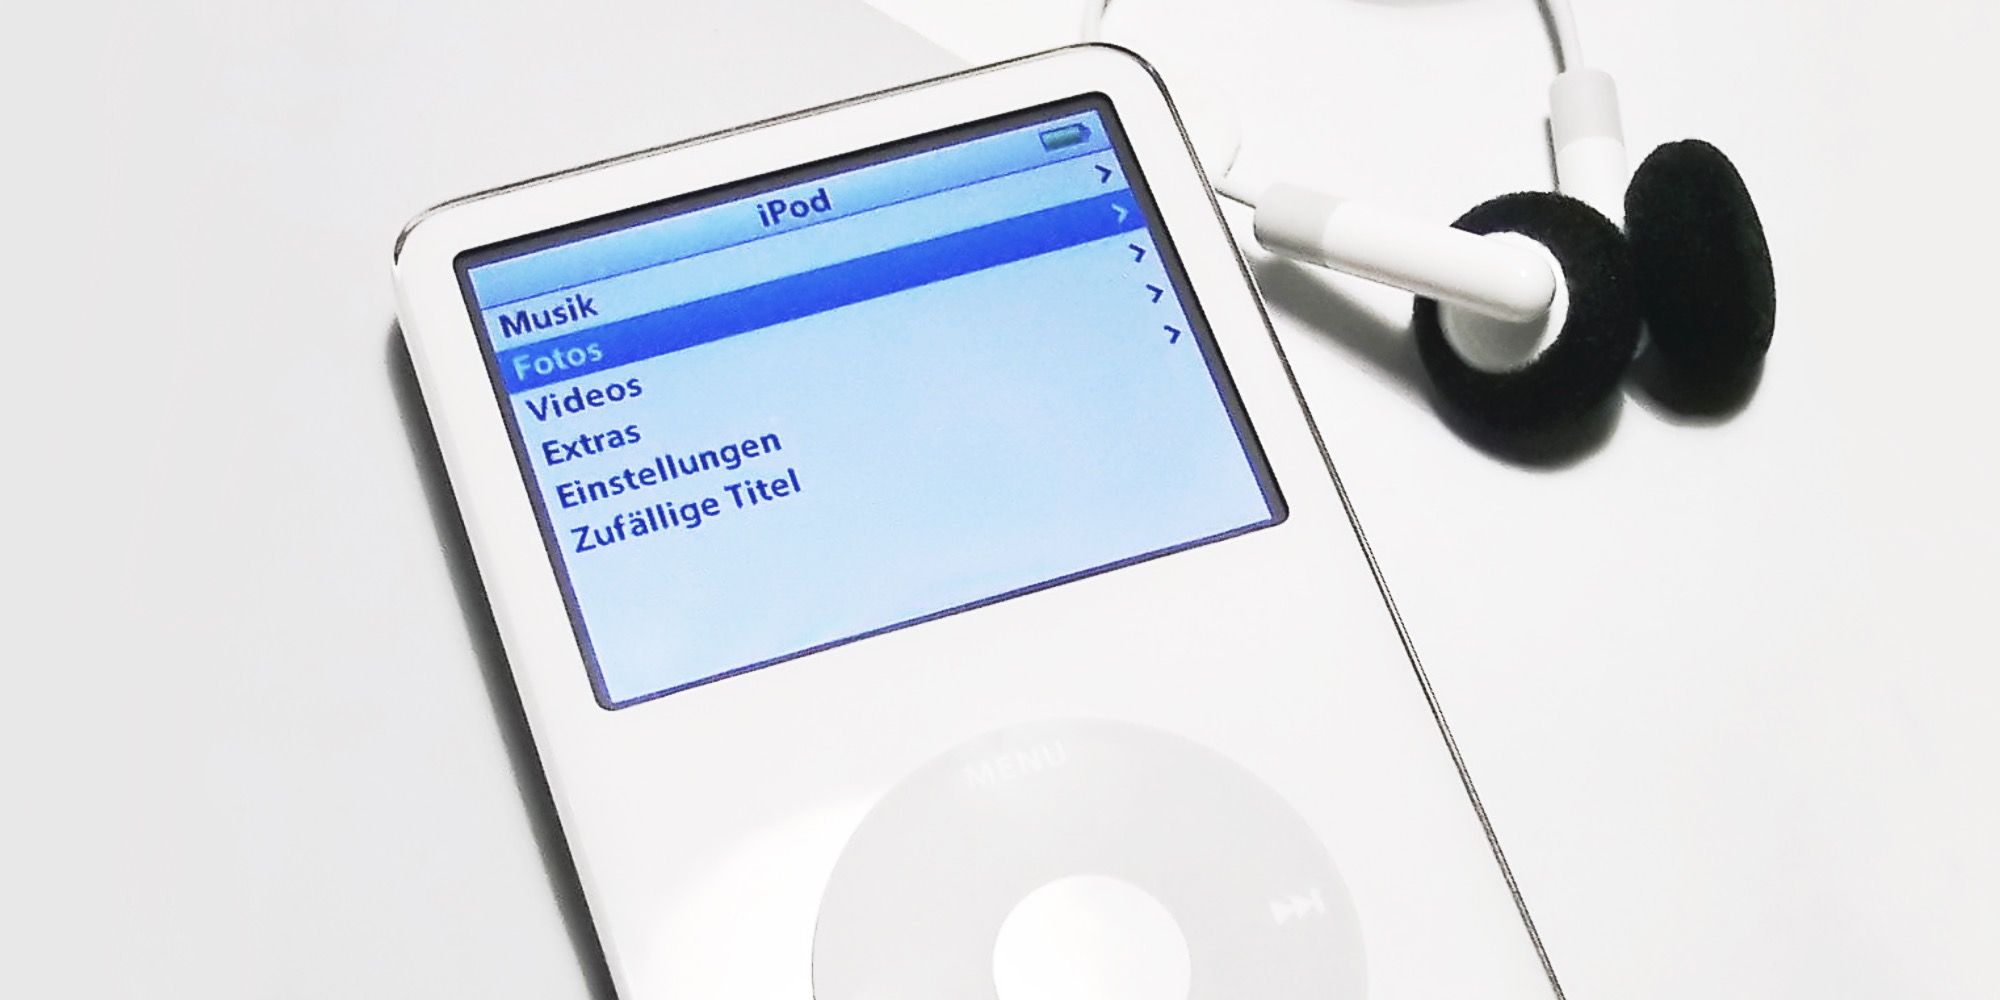 5th Generation Apple iPod